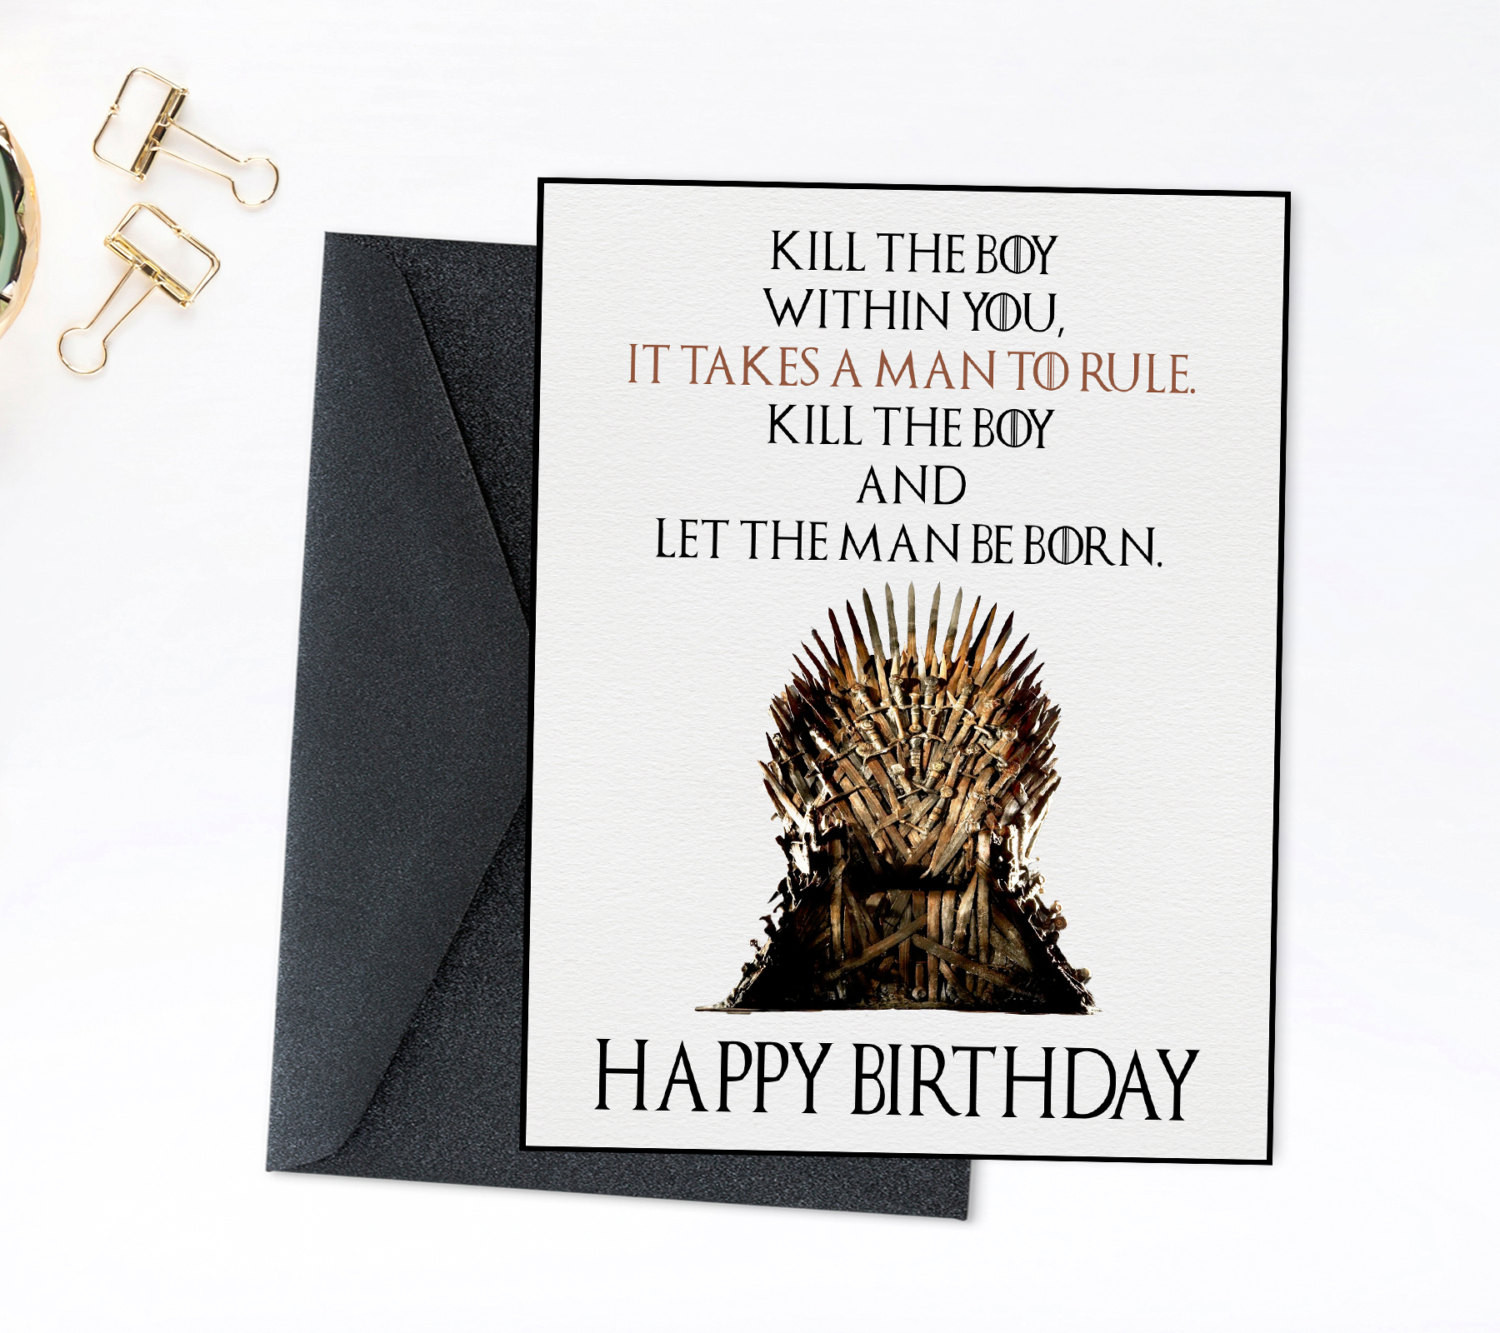 Best ideas about Game Of Thrones Birthday Card
. Save or Pin Game of Thrones Birthday Card Printable Birthday Throne Now.